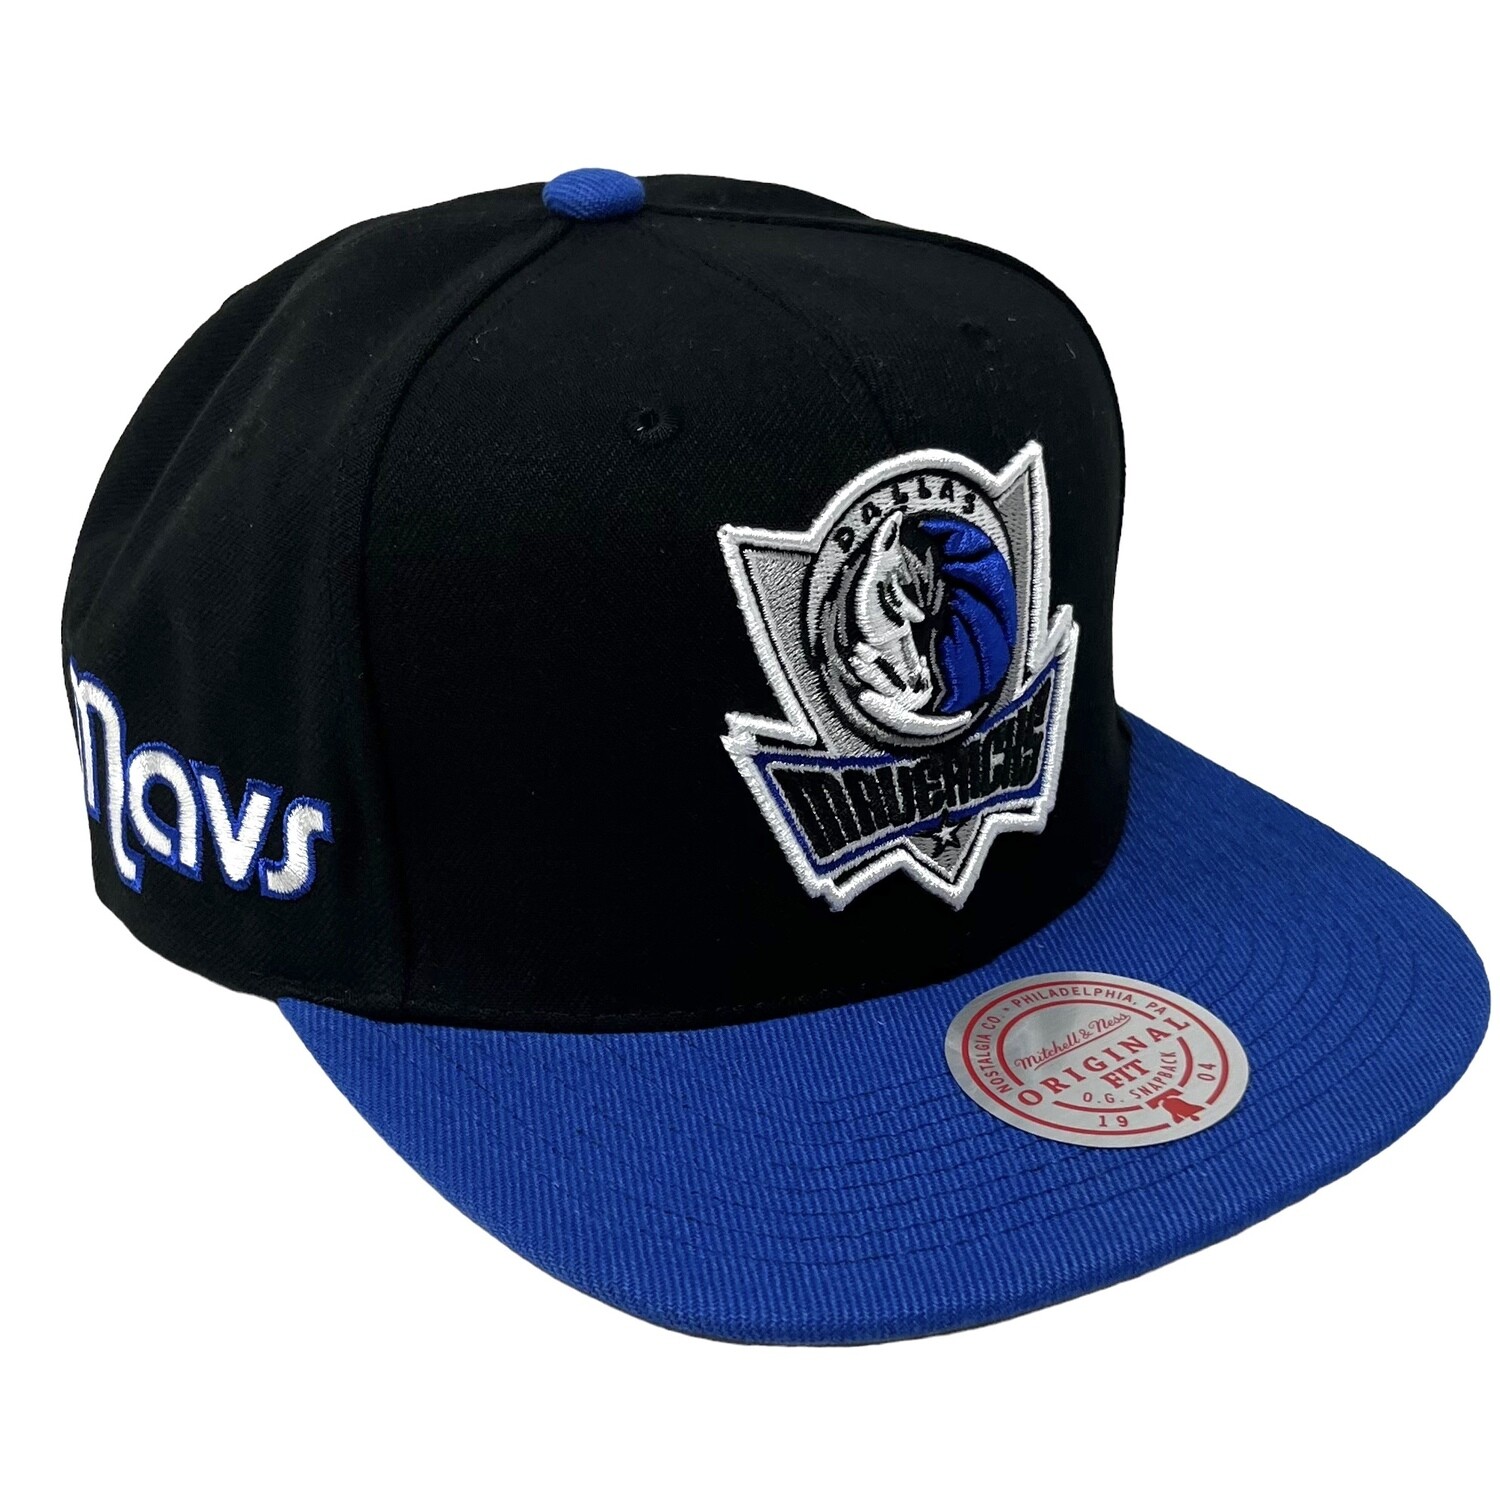 Dallas Mavericks Mitchell & Ness Snapback Hat